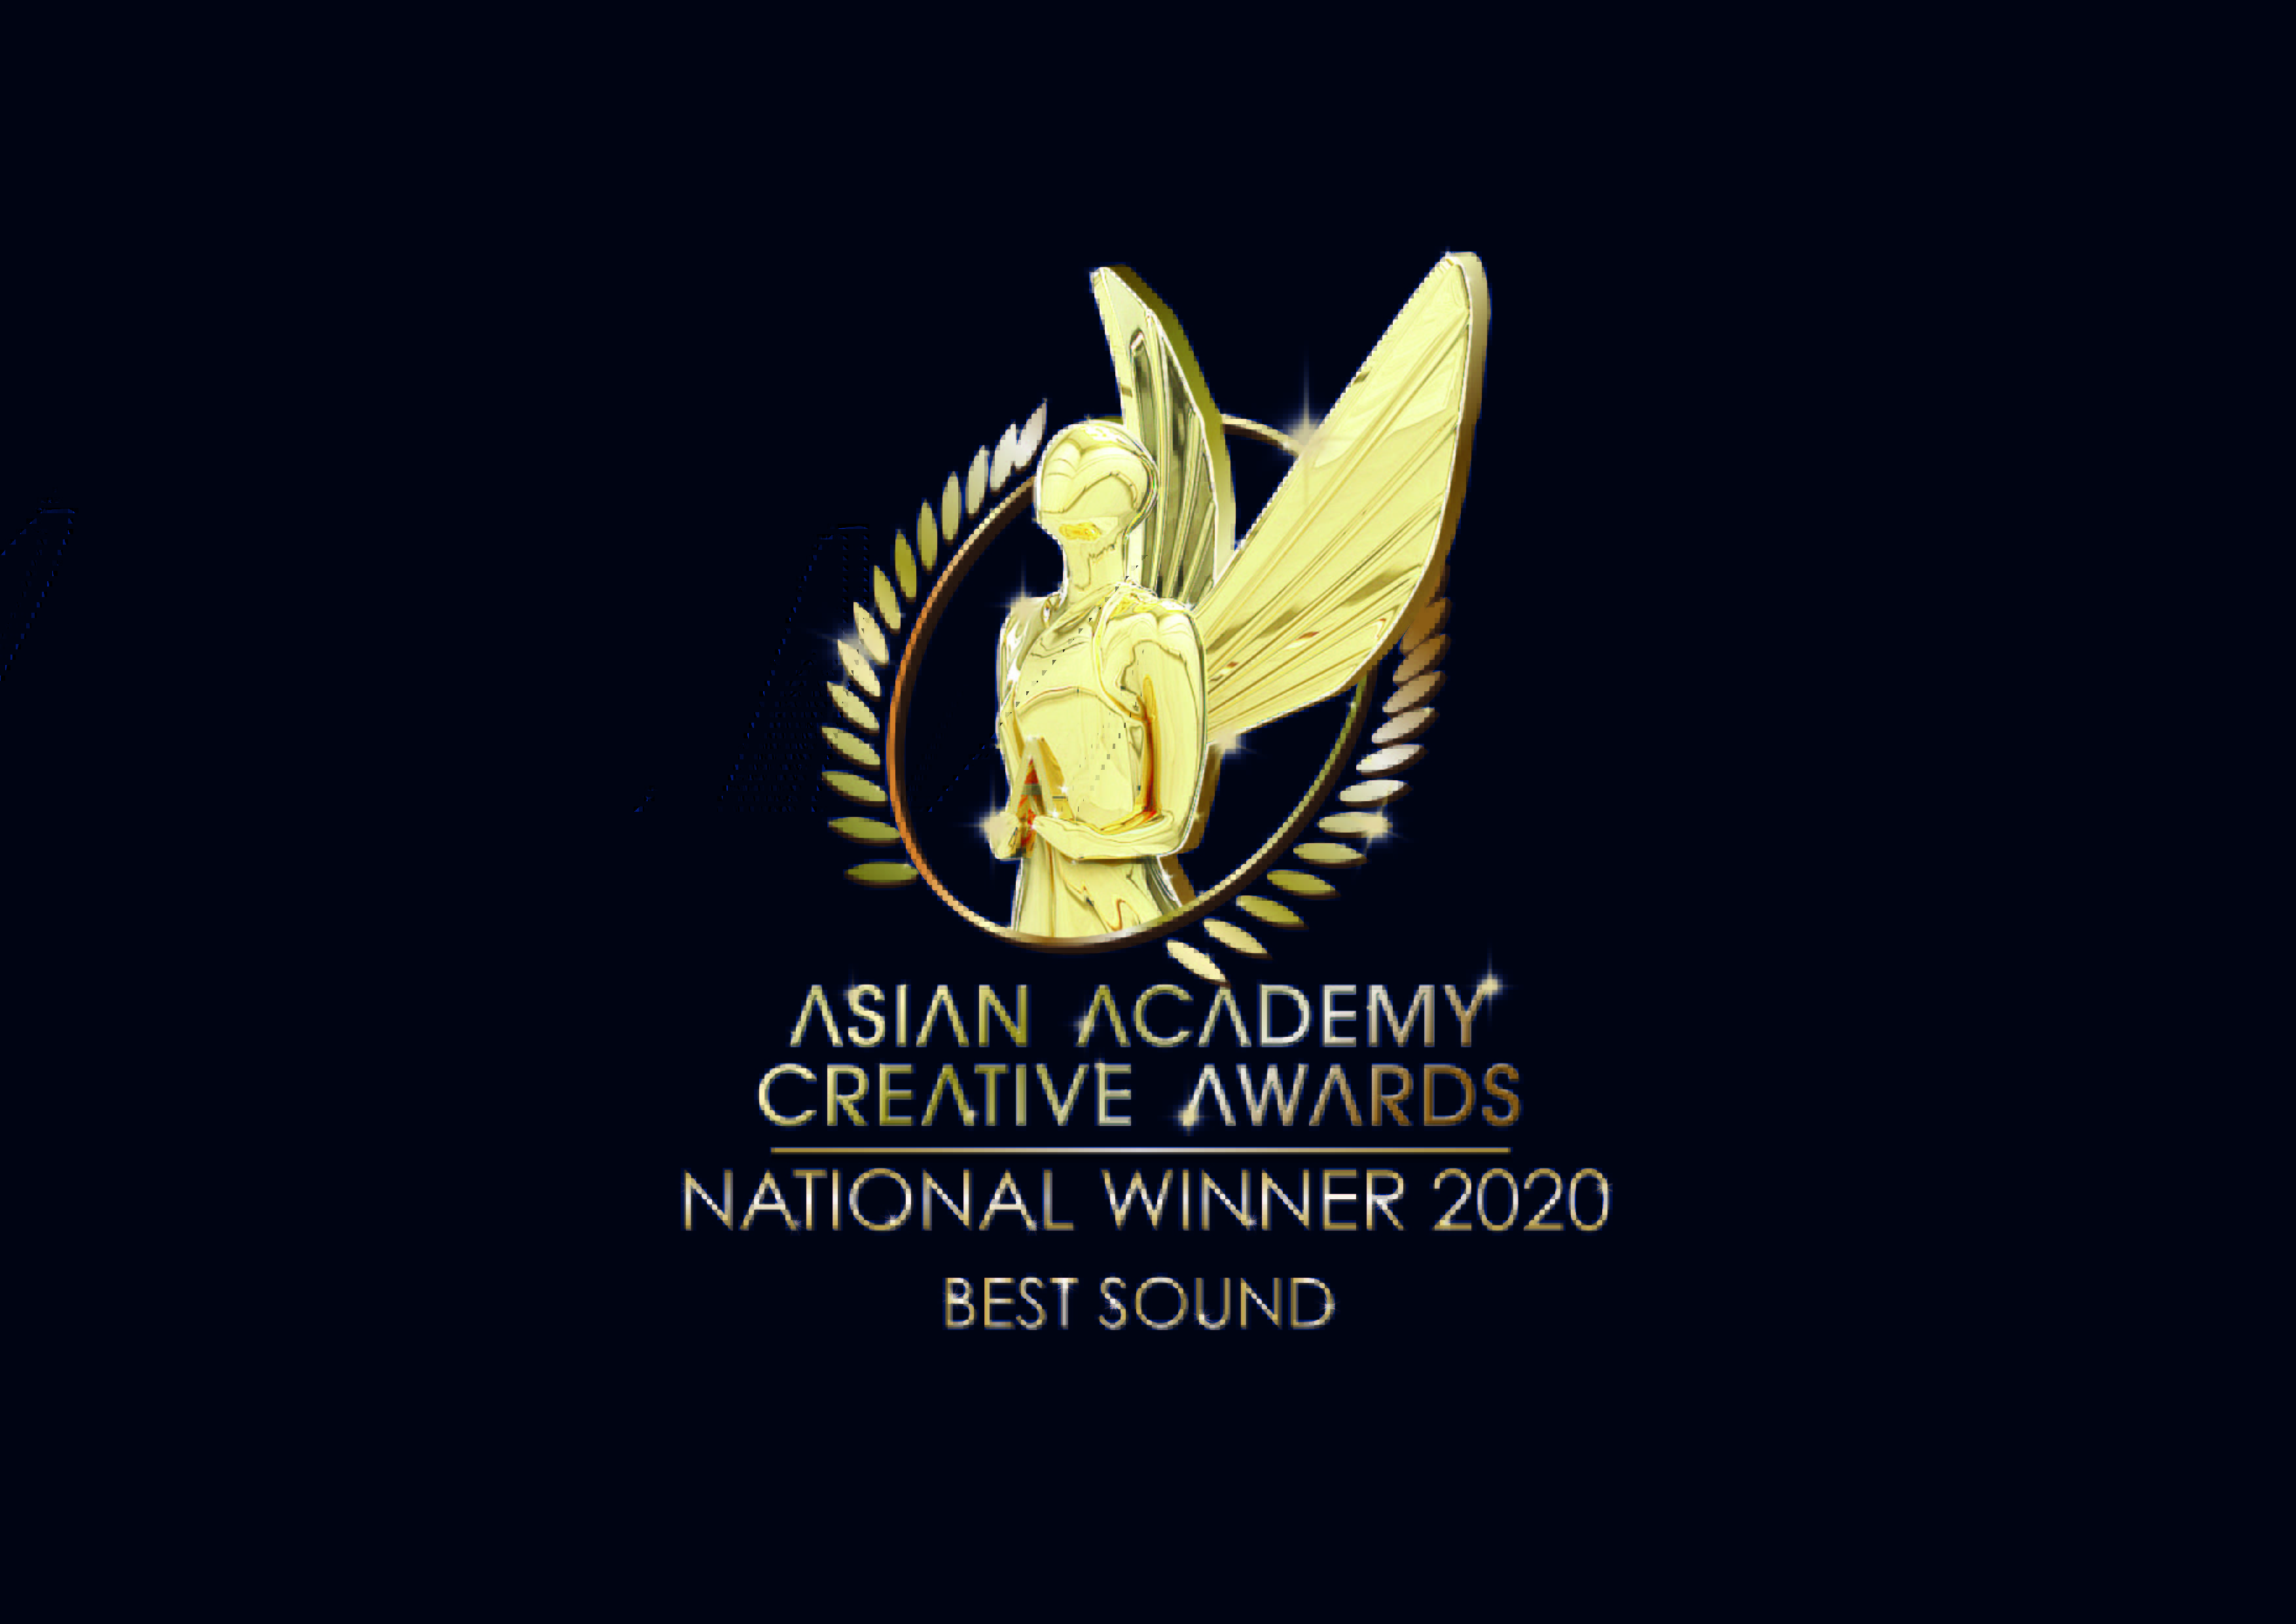 Asian Academy Creative Awards National Winner 2020